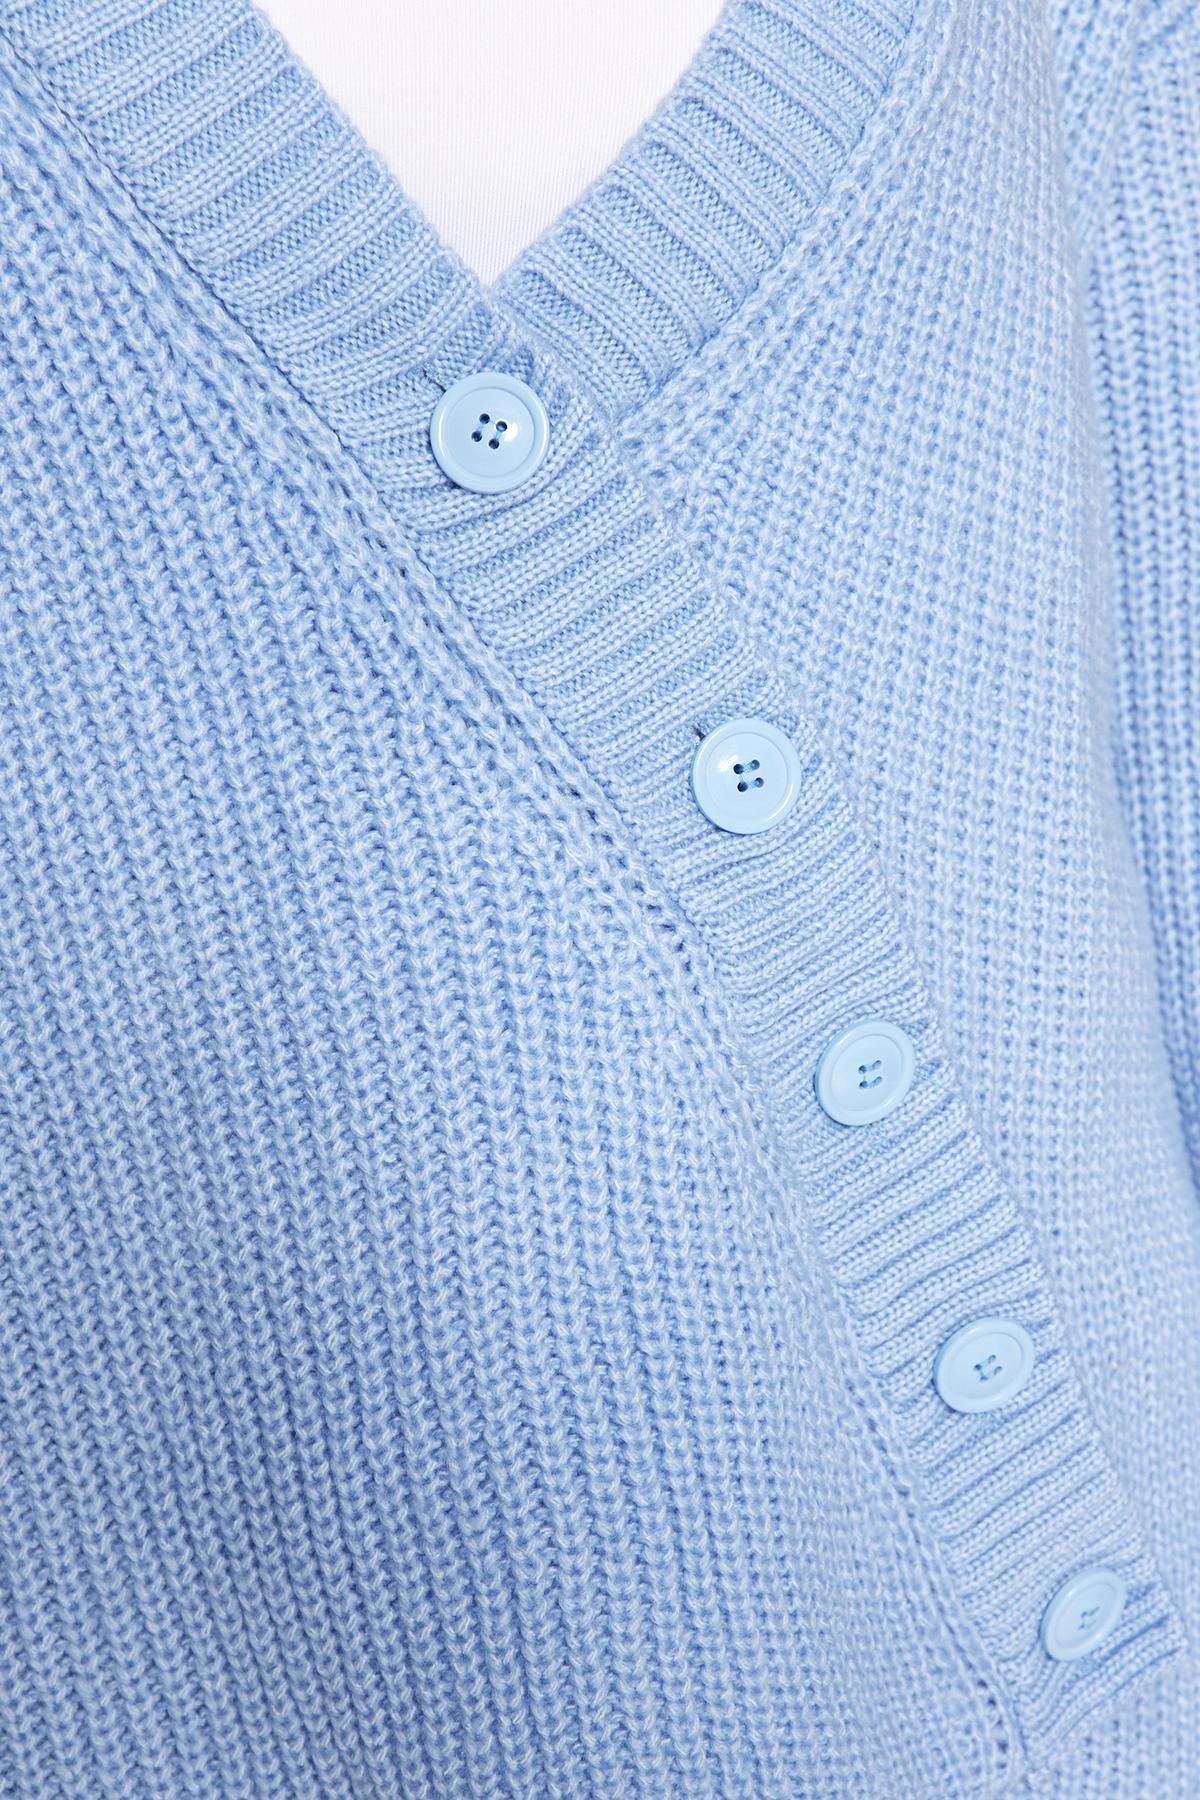 Trendyol - Blue Asymmetrical Knitwear Cardigan